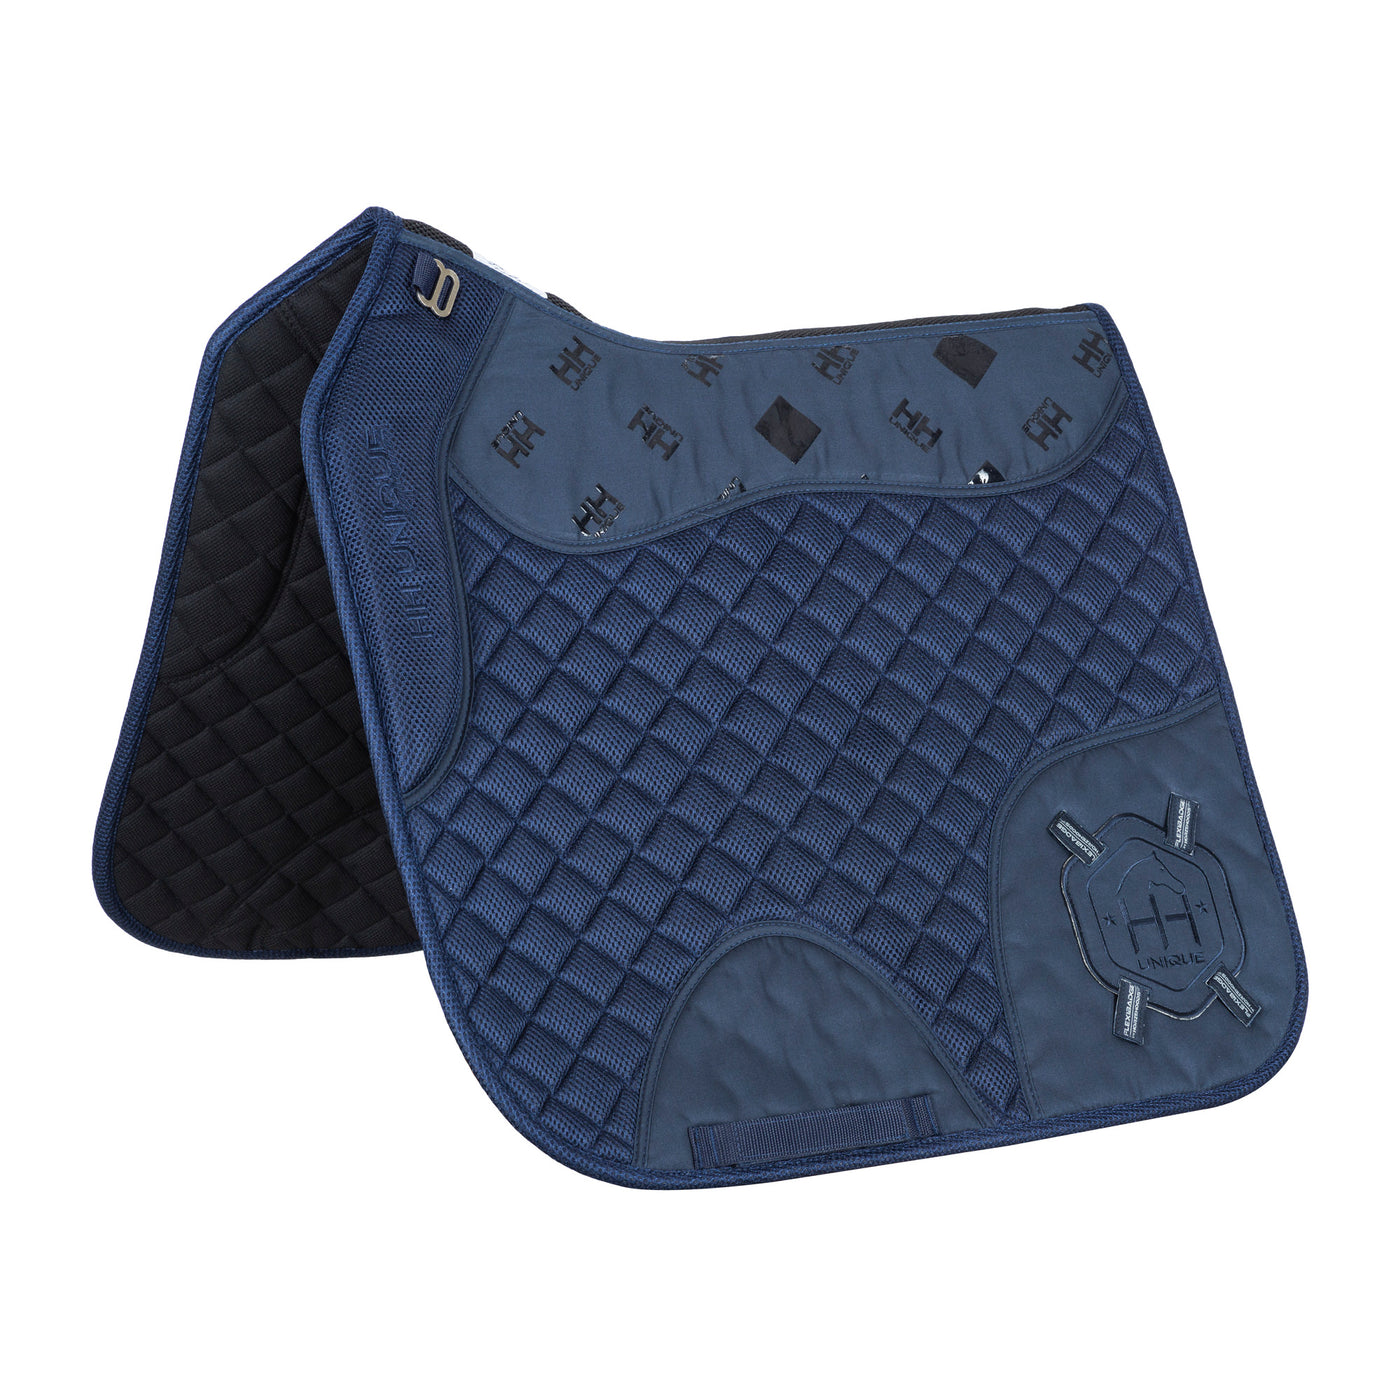 Navy FlexiBadge4D™️ Grip Gel Competition Dressage Pad Kit